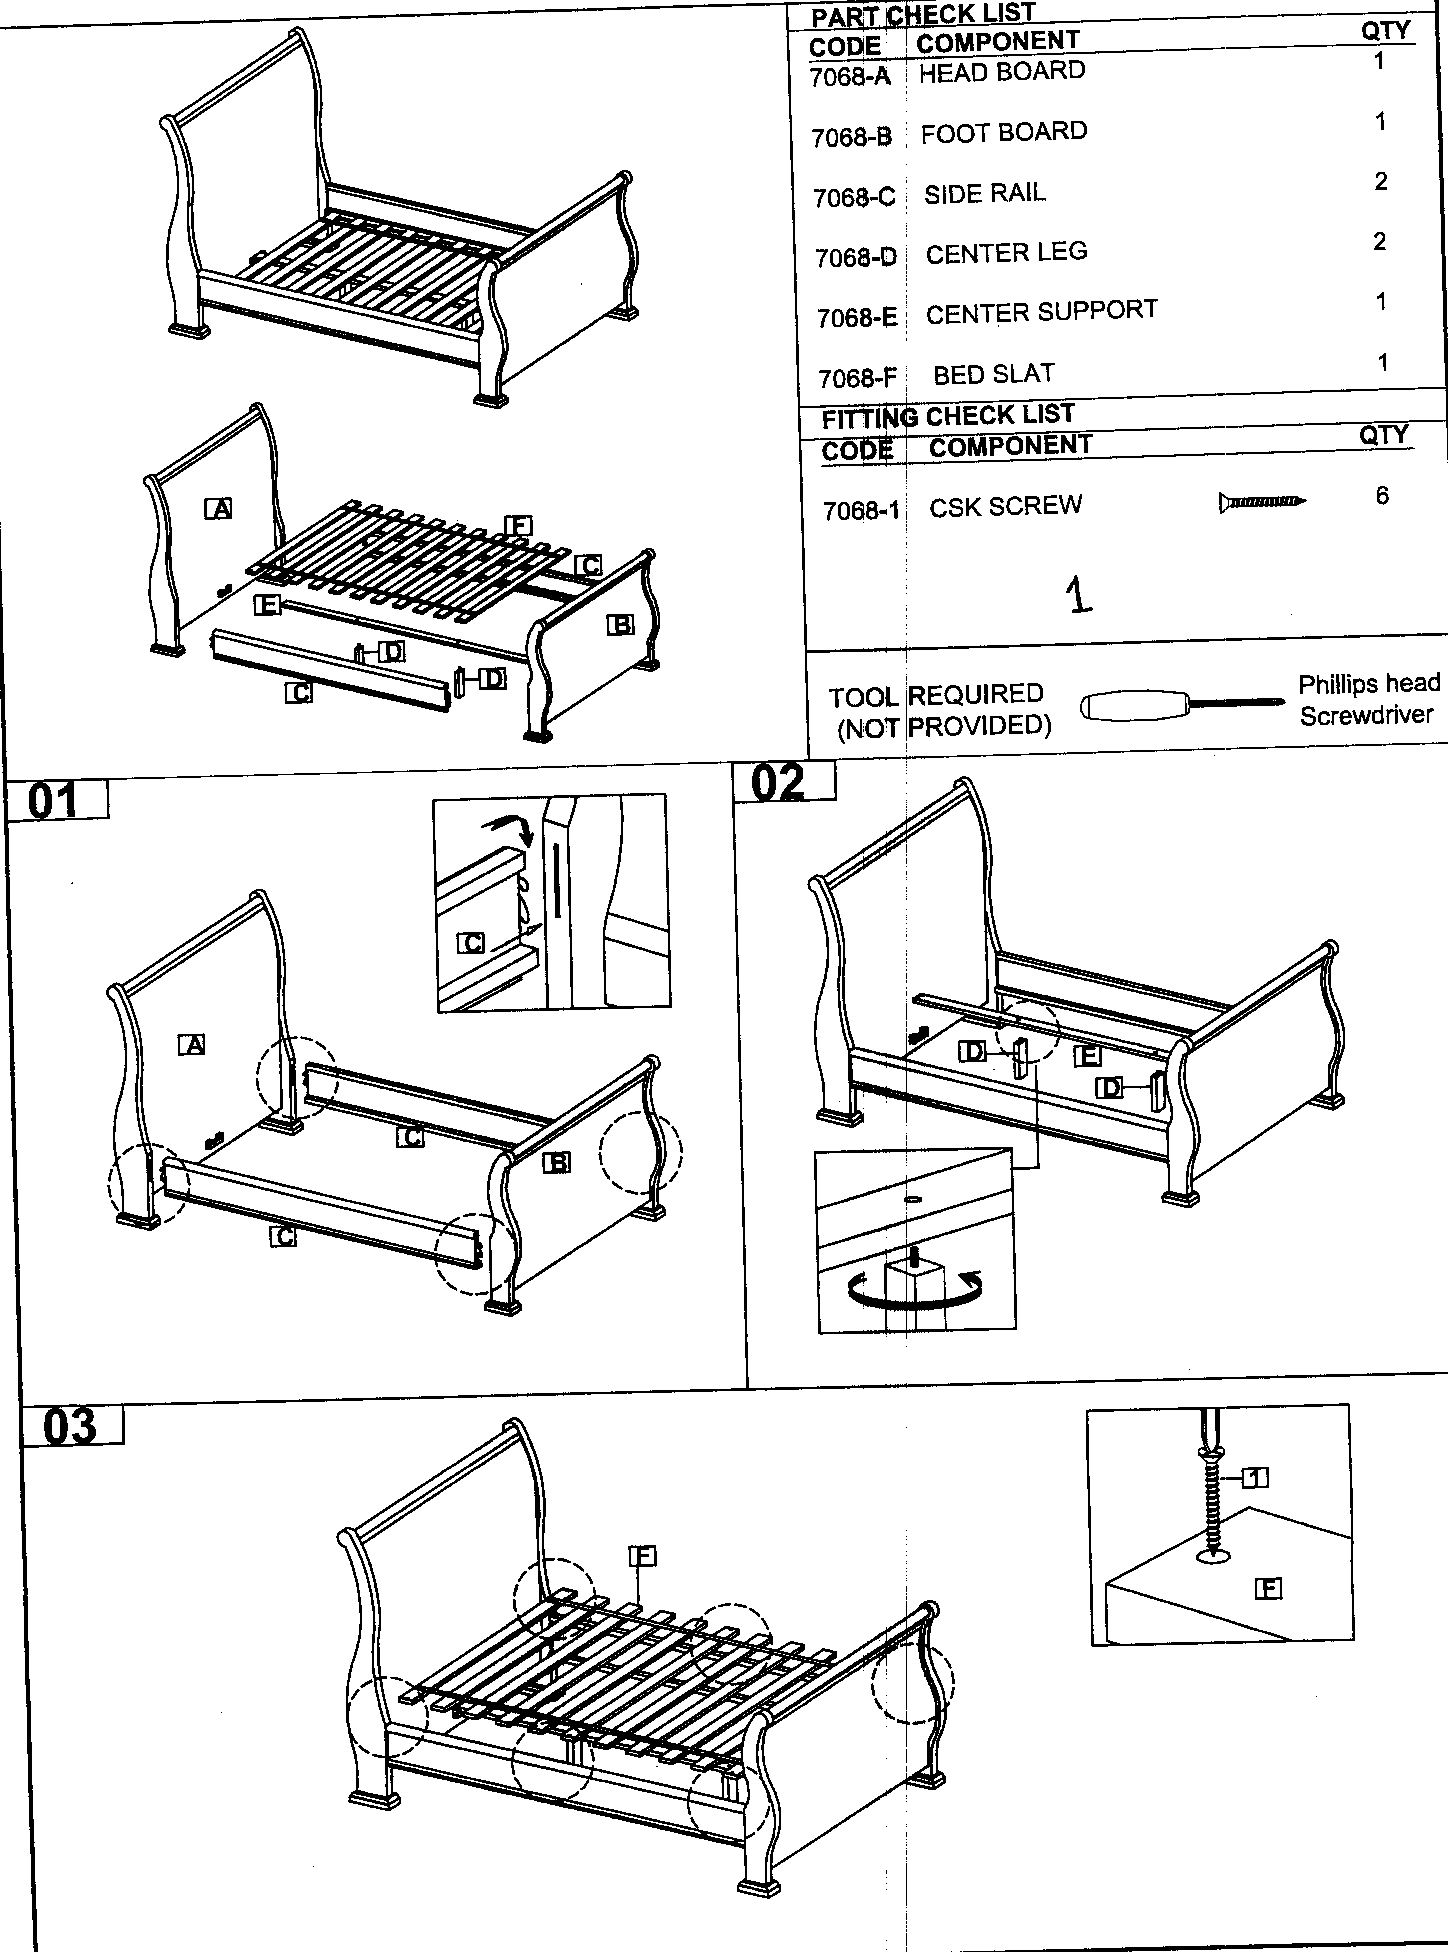 BED Diagram and Parts List for LANDS END Drawer-Unit-Parts model ...